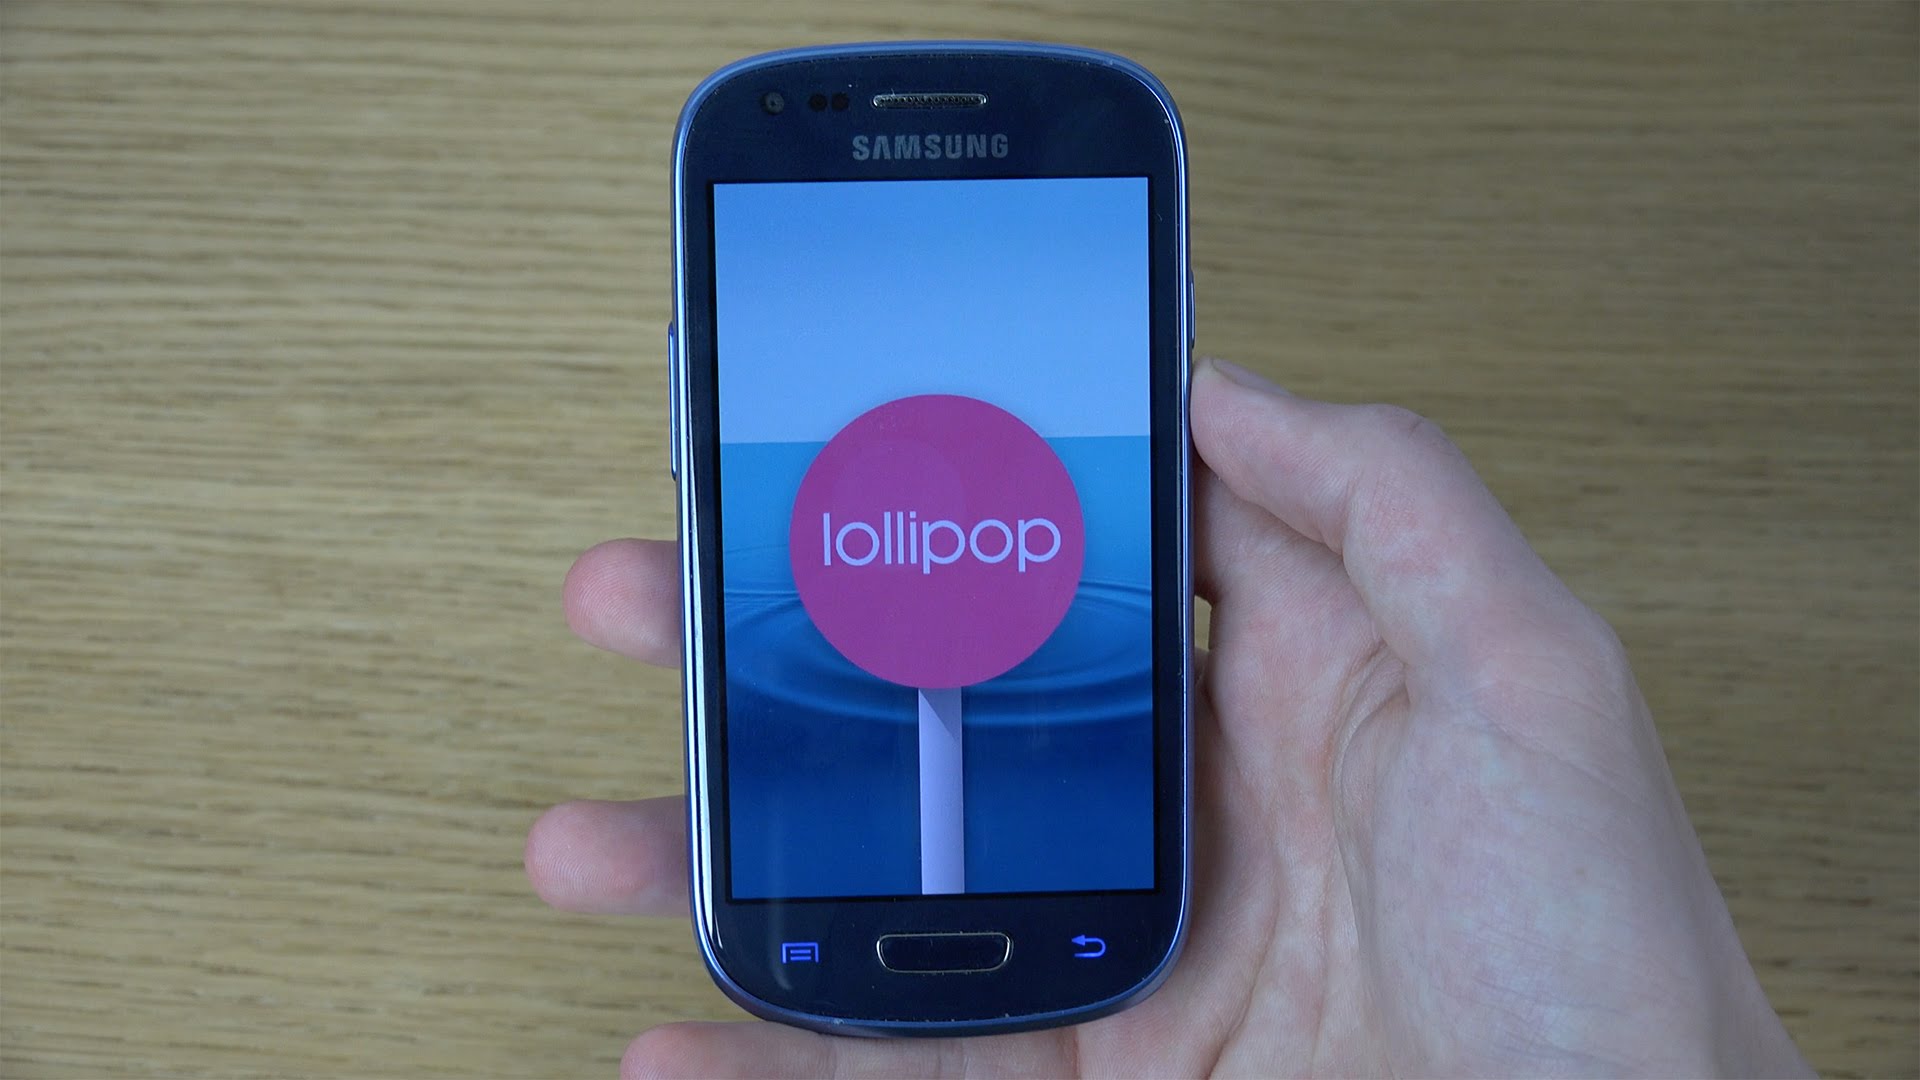 Samsung Galaxy S3 Mini Android 5.0.2 Lollipop Yükleme Rehberi samsung galaxy s3 mini android 5 yükleme samsung galaxy s3 mini android 5 yükle s3 mini android 5 yükleme s3 mini android 5 galaxy s3 mini cm 12 update galaxy s3 mini cm 12 